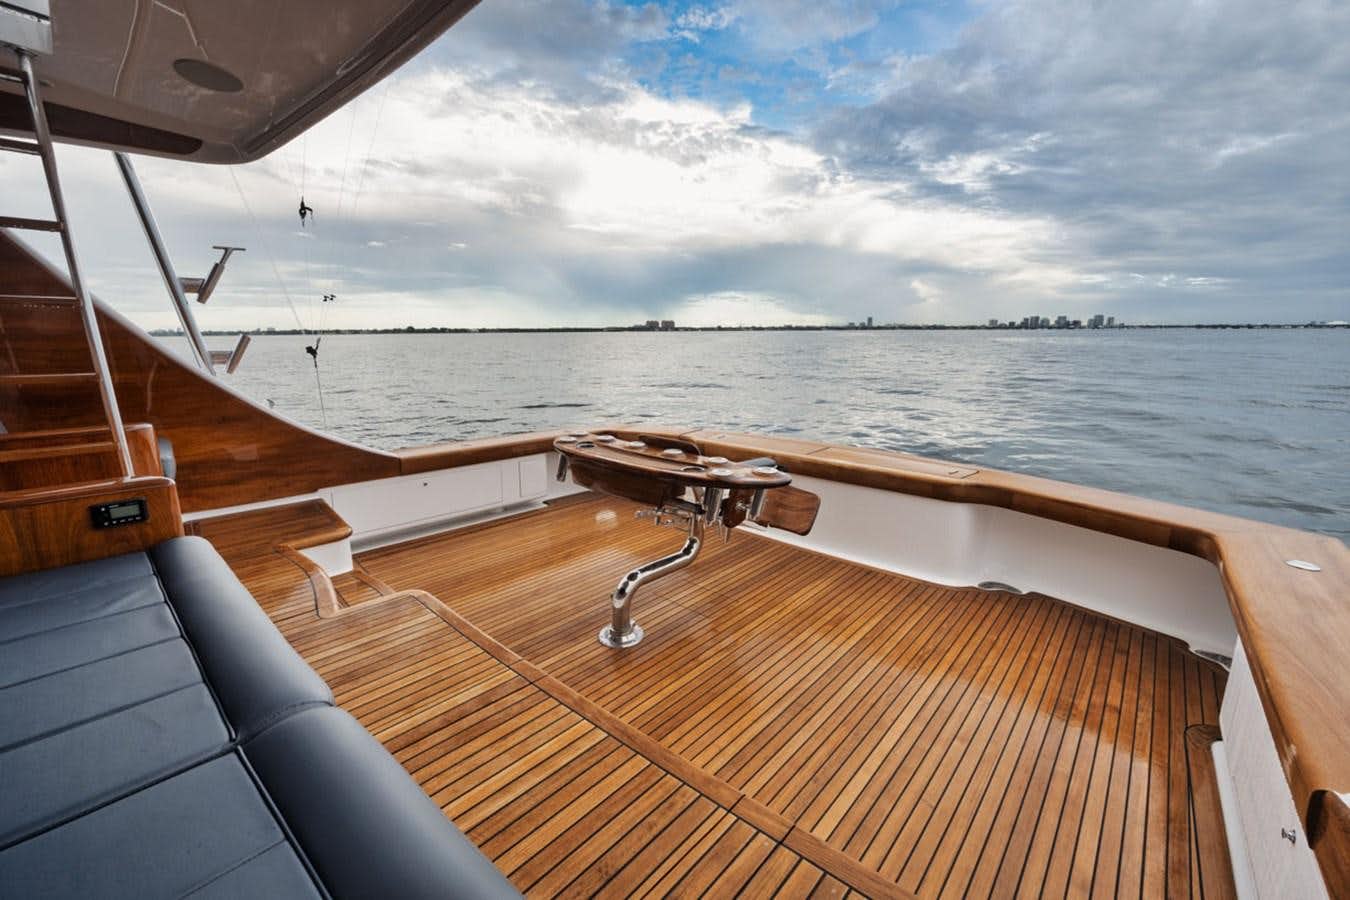 FULL TIME Yacht for Sale, 77' (23.46m) 2019 PAUL MANN CUSTOM BOATS